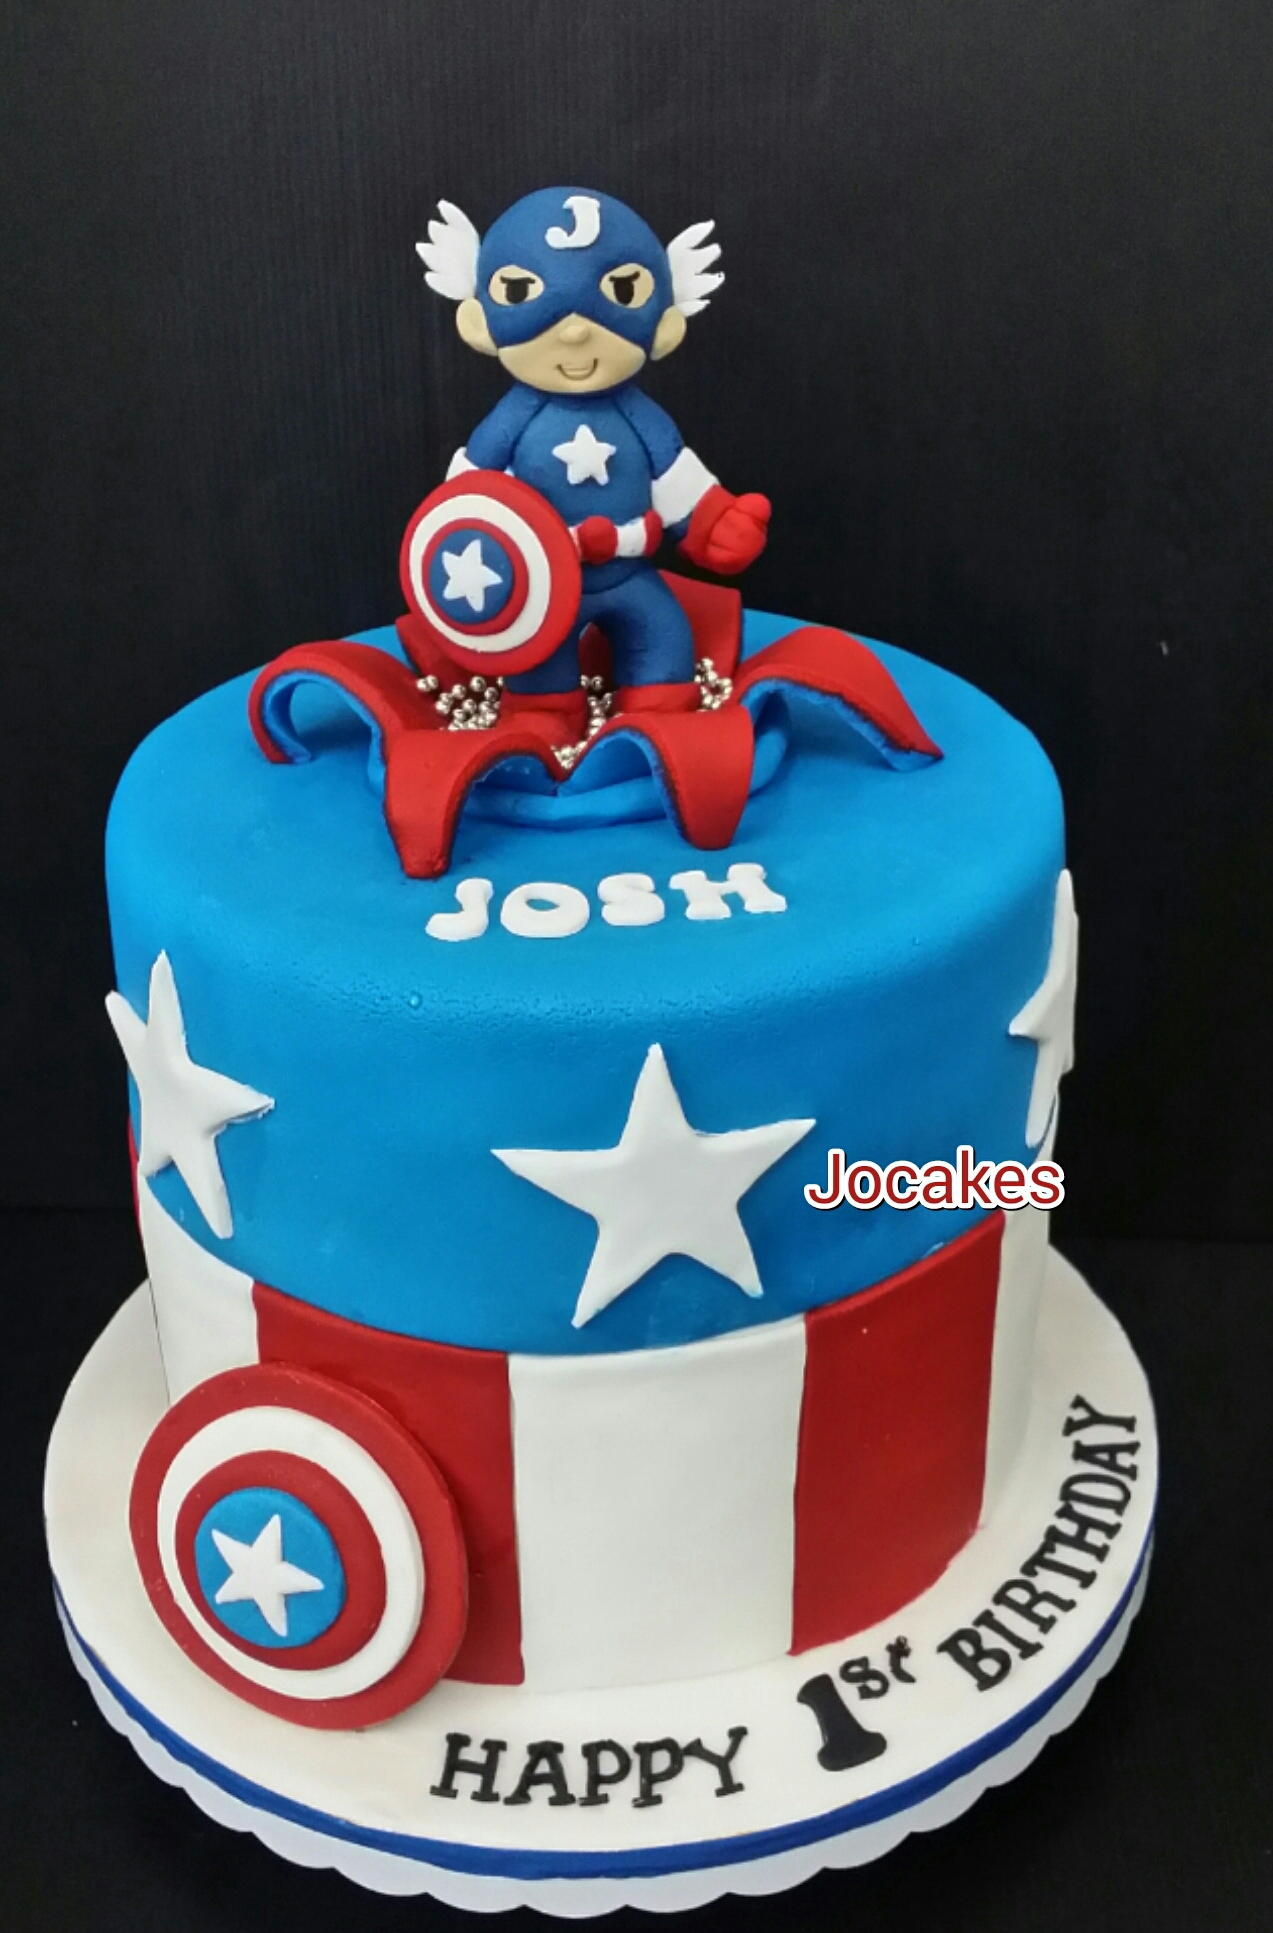 Avengers Birthday Cake - Buy Online, Free UK Delivery — New Cakes